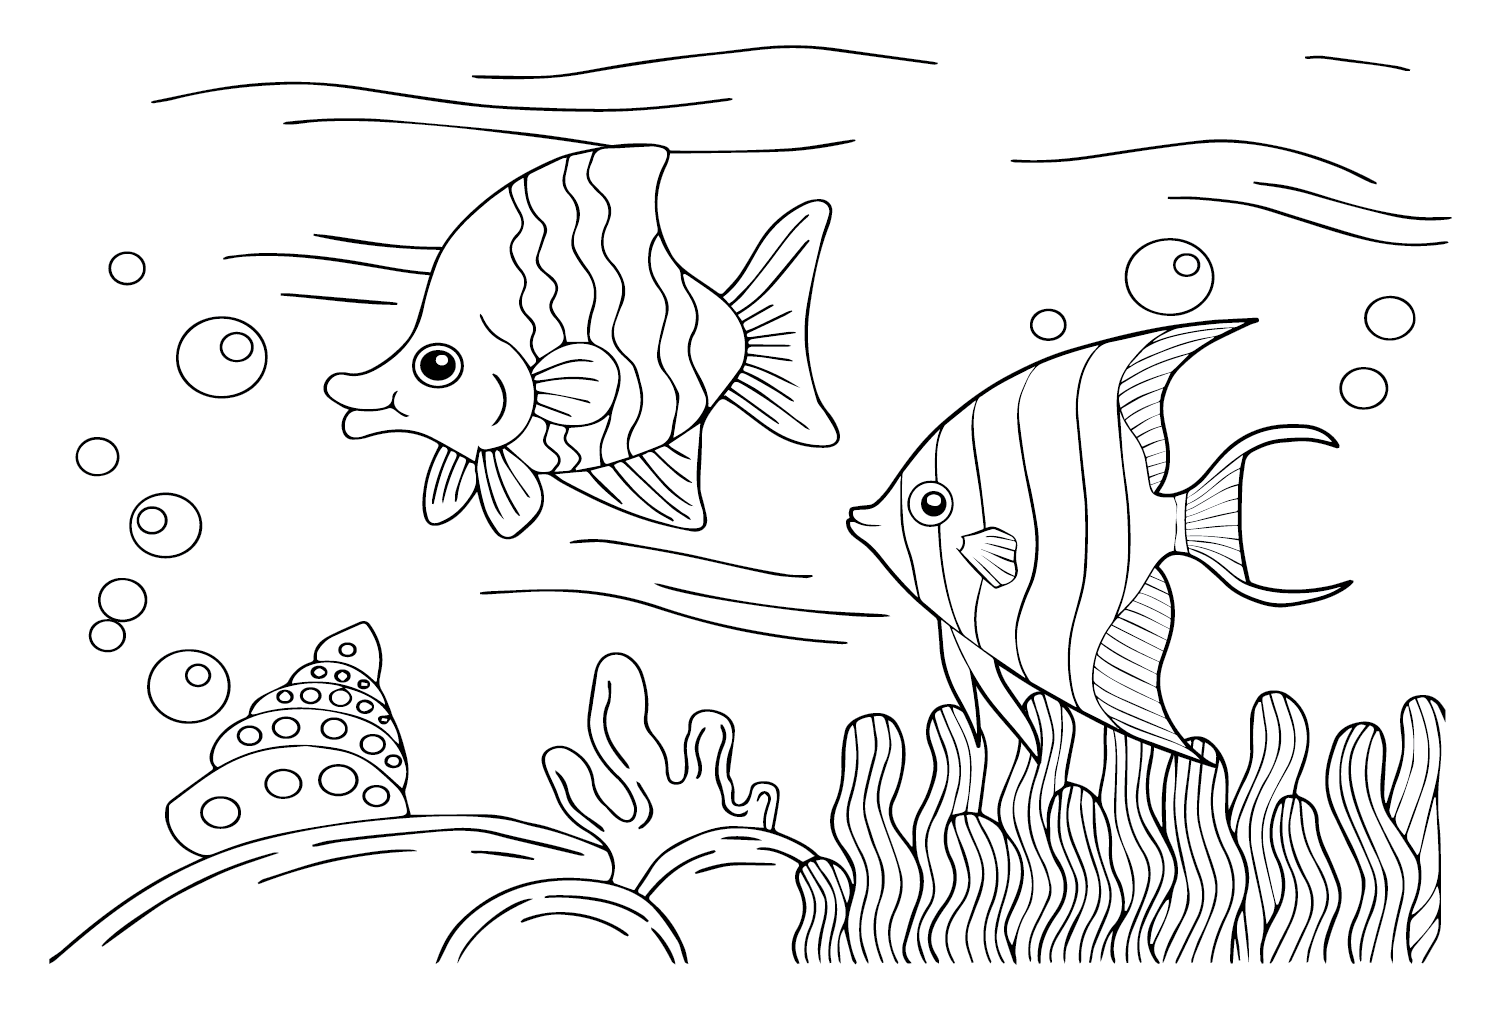 Раскраска рыбки для детей 5 6 лет. Рыба раскраска. Раскраска аквариум с рыбками. Рыбка раскраска для детей.